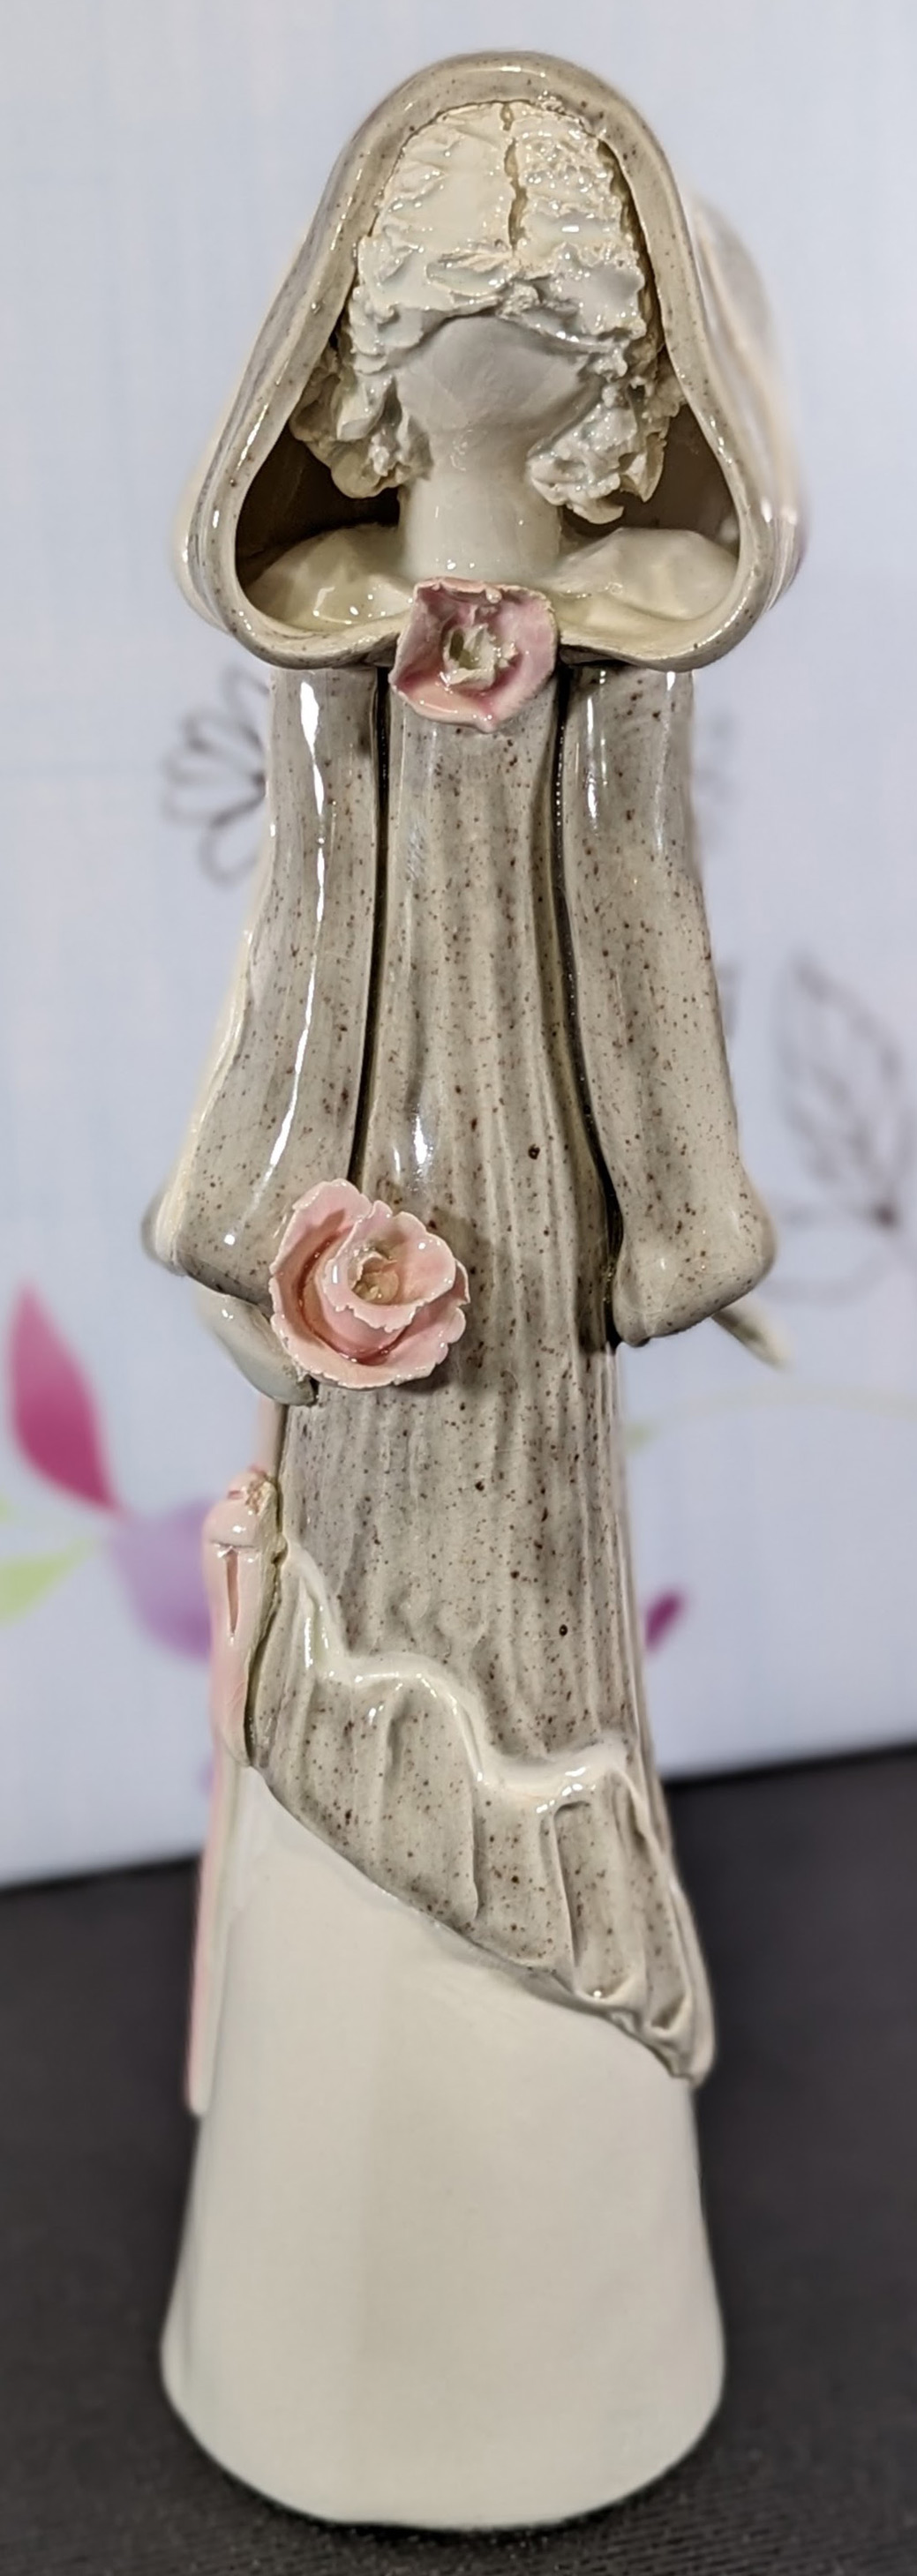 Paule LeFebure, Faceless Lady figurine